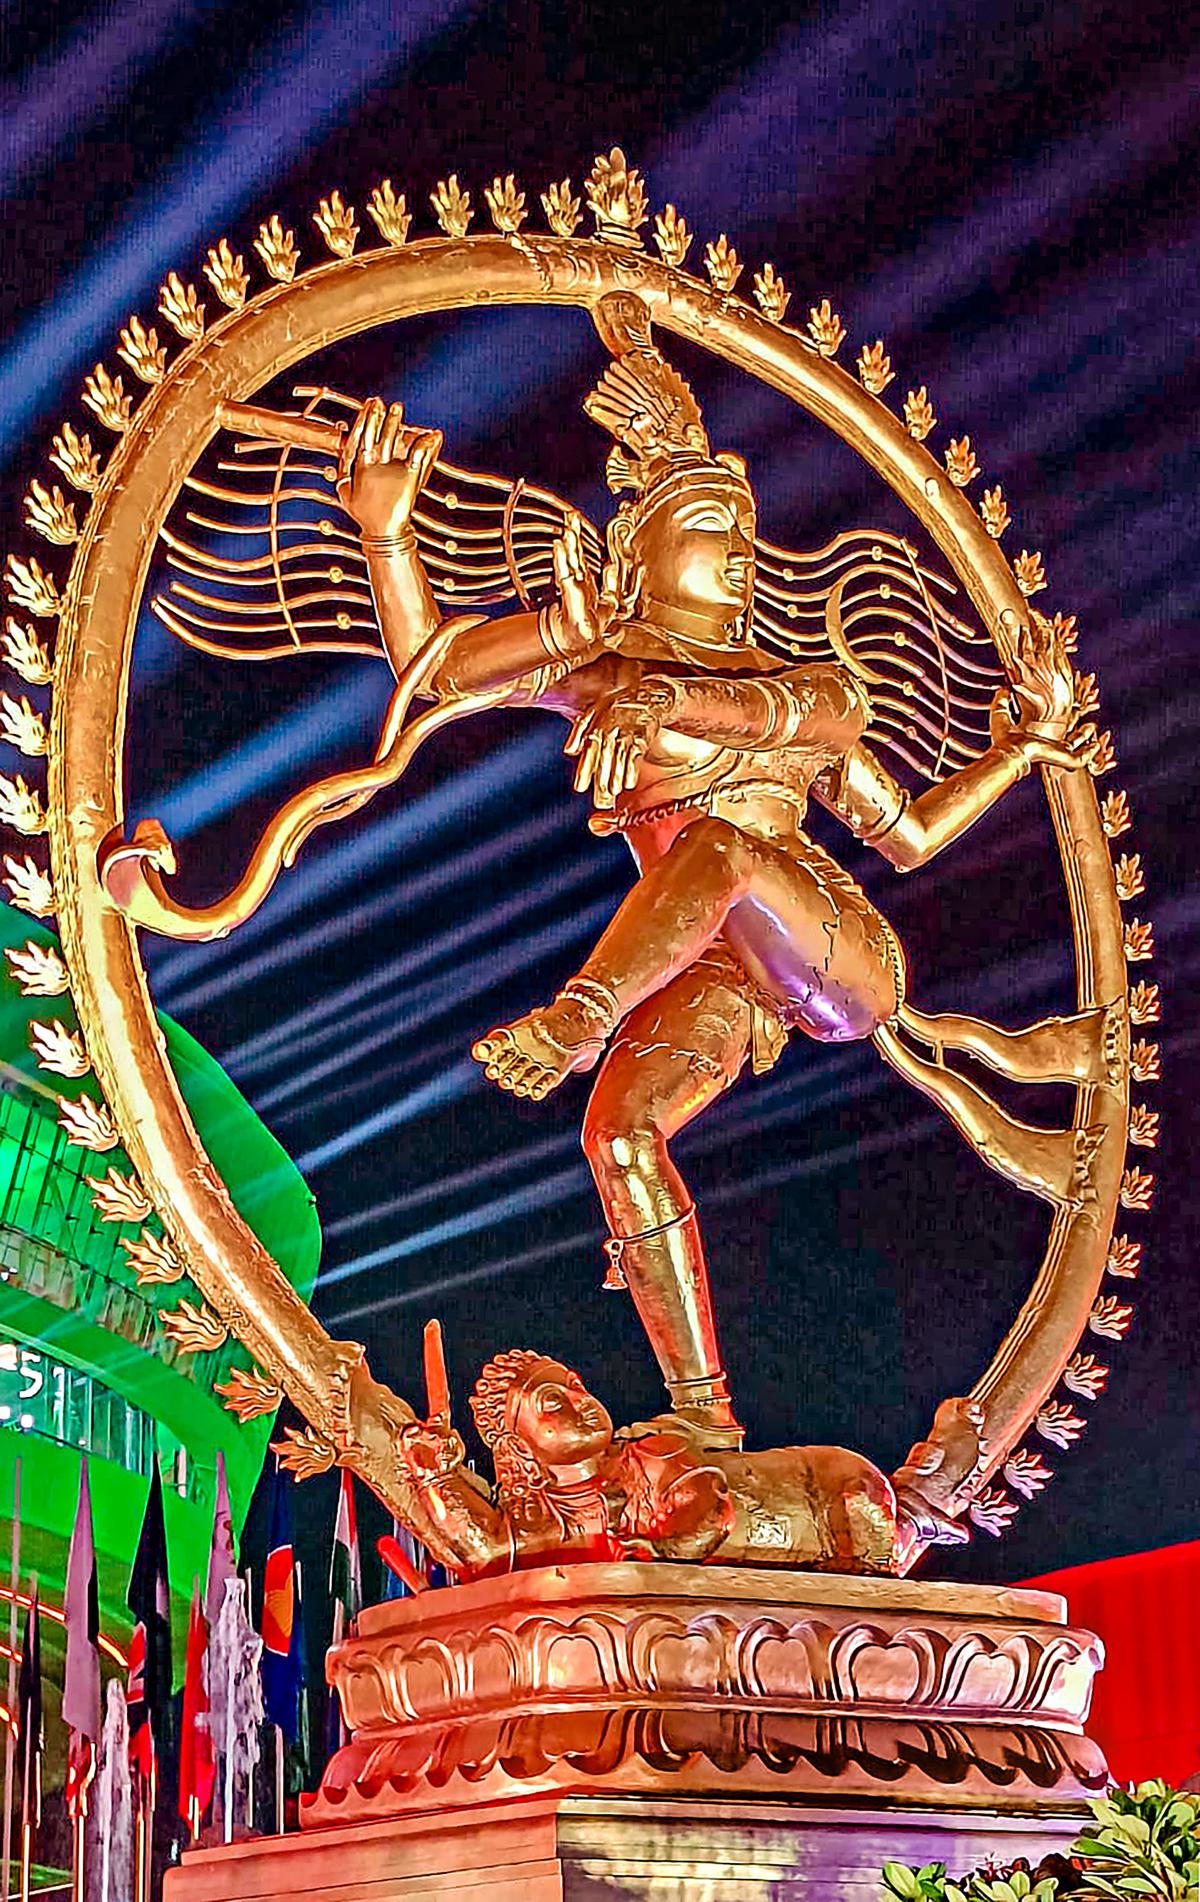 Amazon.com: Lord Shiva as Nataraja - Brass Statue : Home & Kitchen